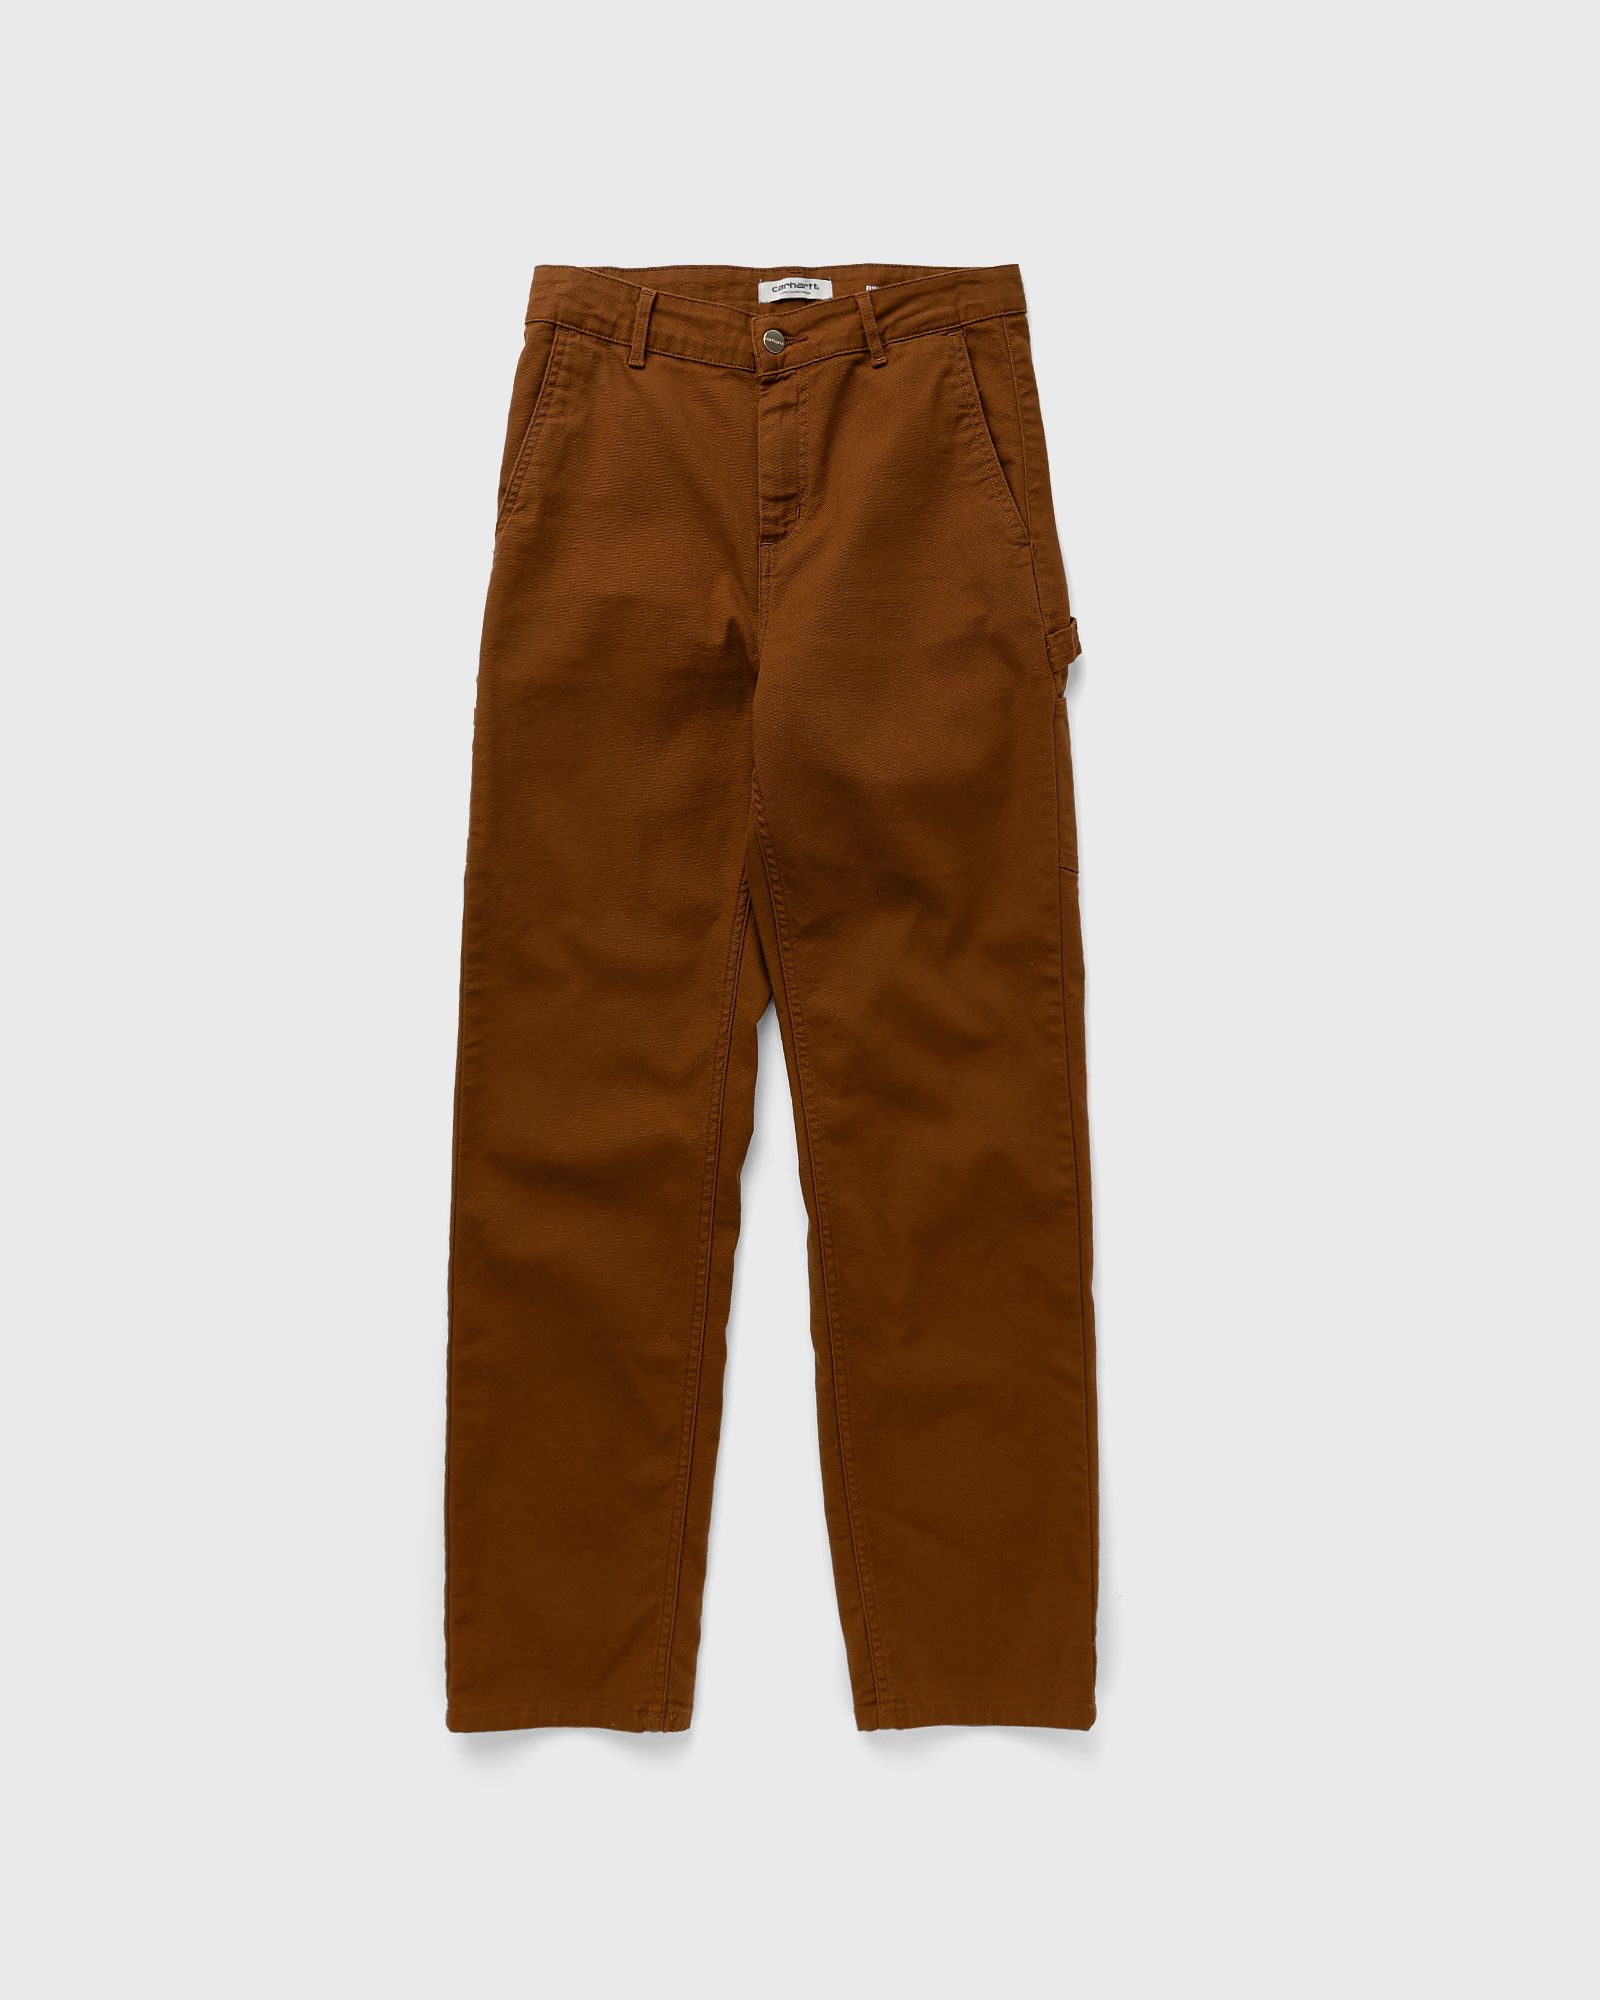 Carhartt WIP - wmns pierce pant straight women casual pants brown in größe:s